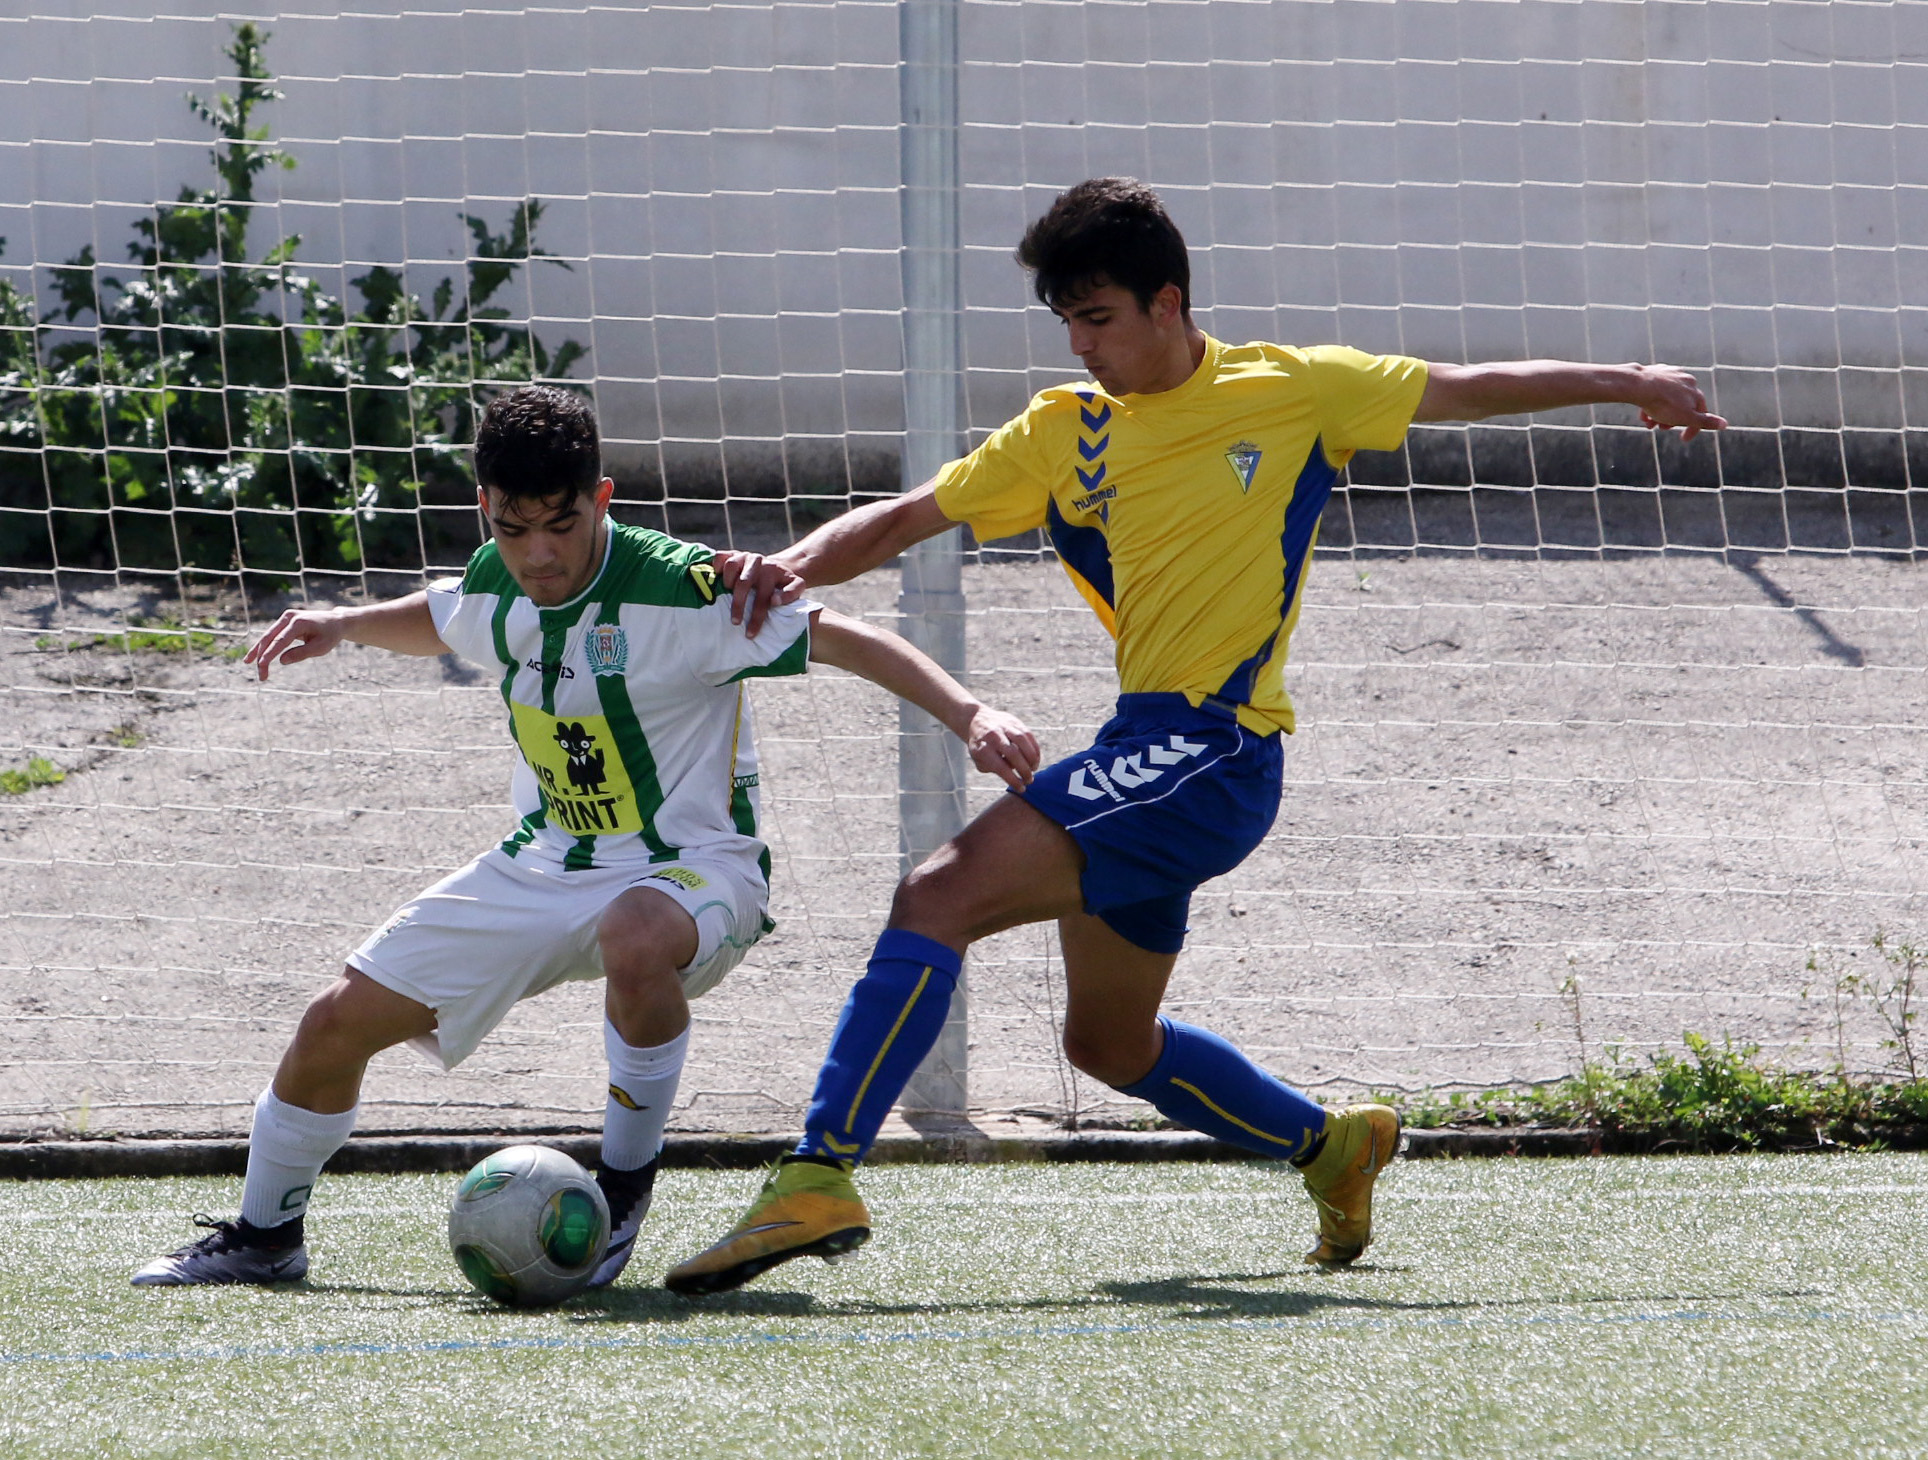 Fútbol: Córdoba-Cádiz. División de Honor Juvenil. Córdoba. cordoba 1.jpg